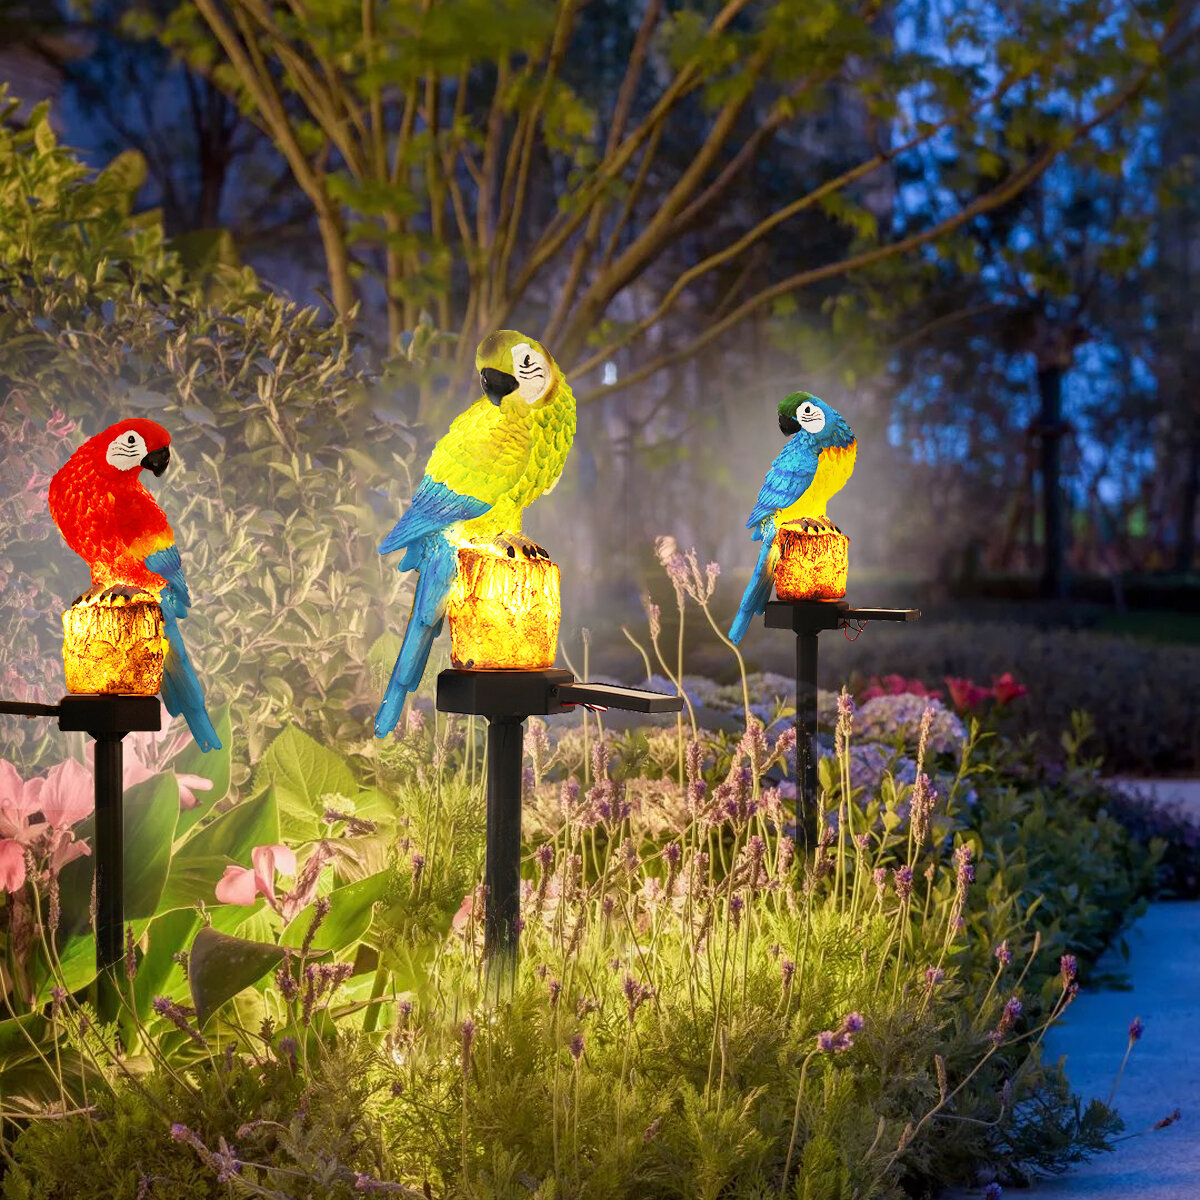 Solar LED Animals parrot Lawn Light Outdoor Garden Lawn Landscape Hanging Lamp 